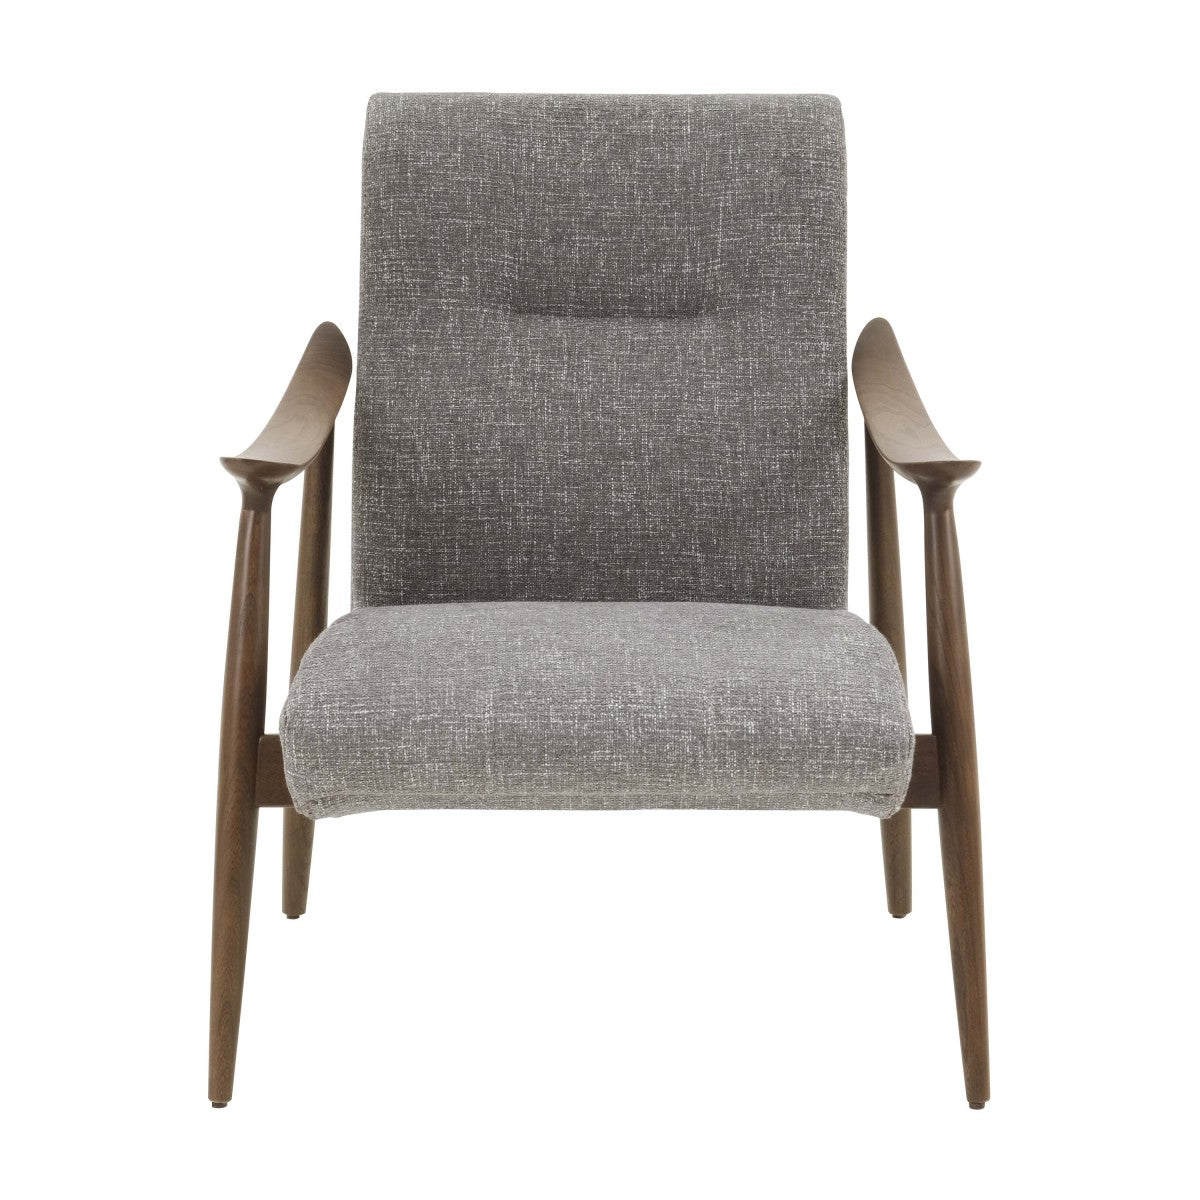 Kami Sleek Bespoke Upholstered Mid Century Modern Contemporary Armchair MSB2P Custom Made To Order